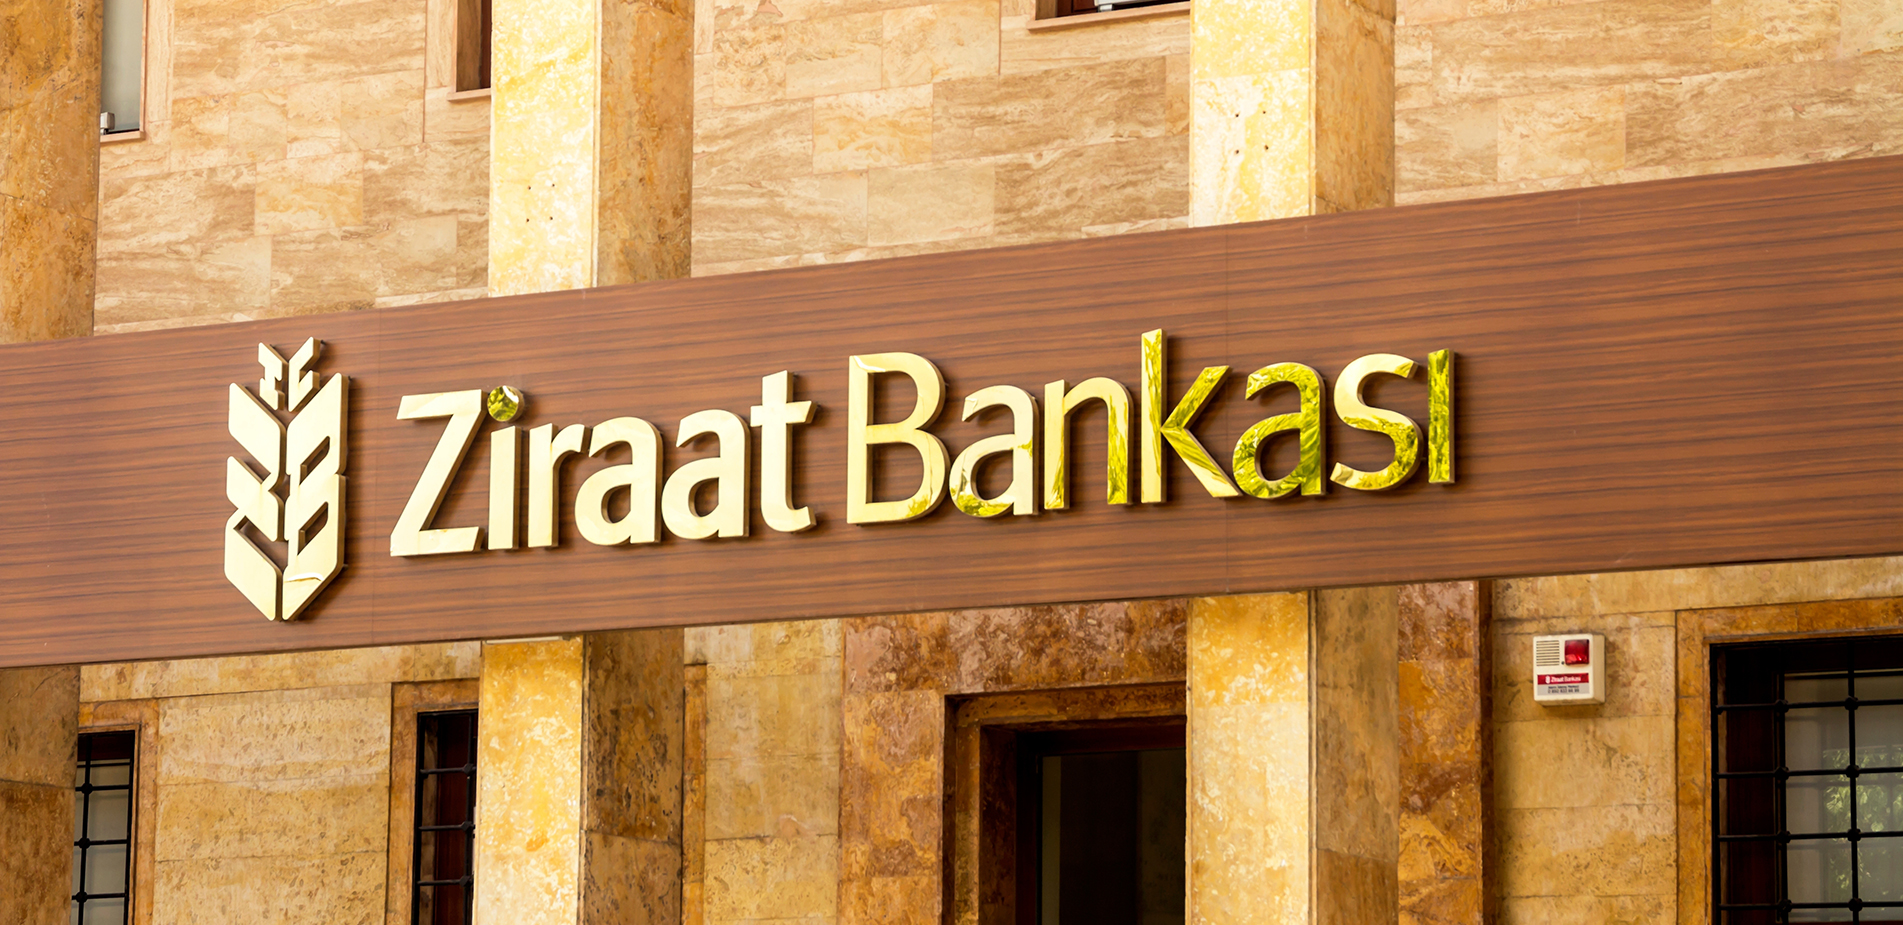 Ziraat Bankasi: Τι θέλει η μεγαλύτερη τουρκική τράπεζα στη Θράκη